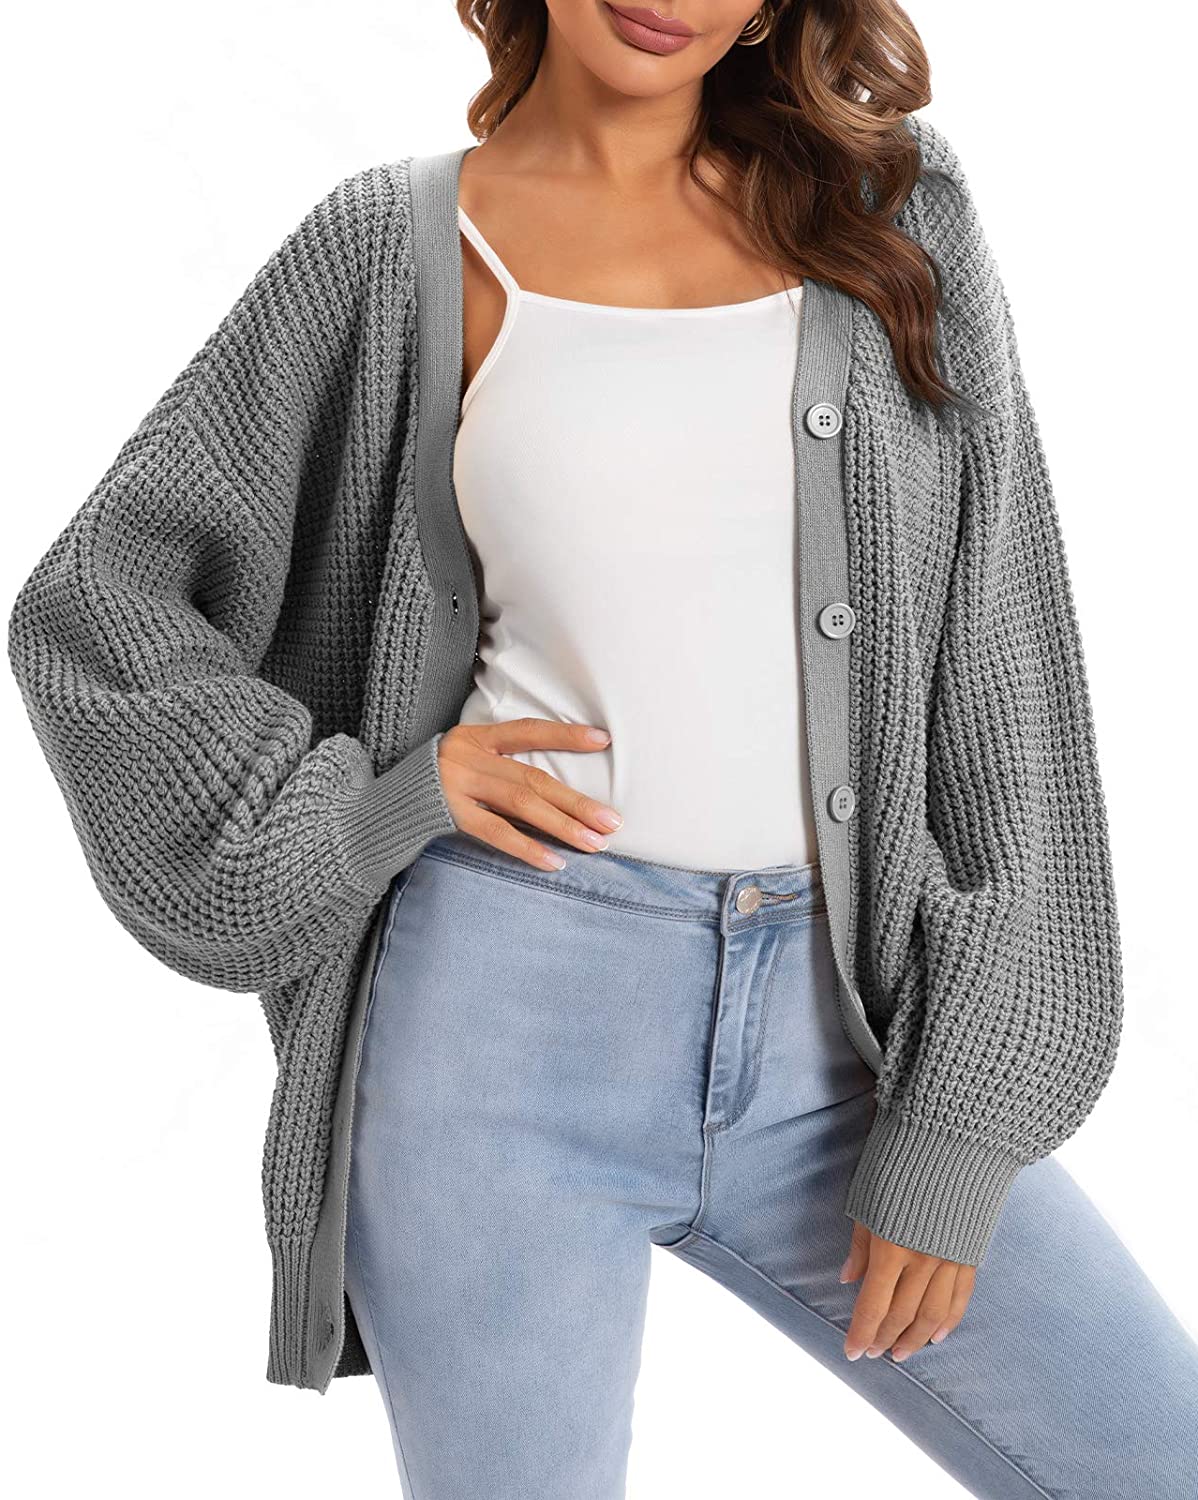 QUALFORT Women's Cardigan Sweater 100% Cotton Button-Down Long